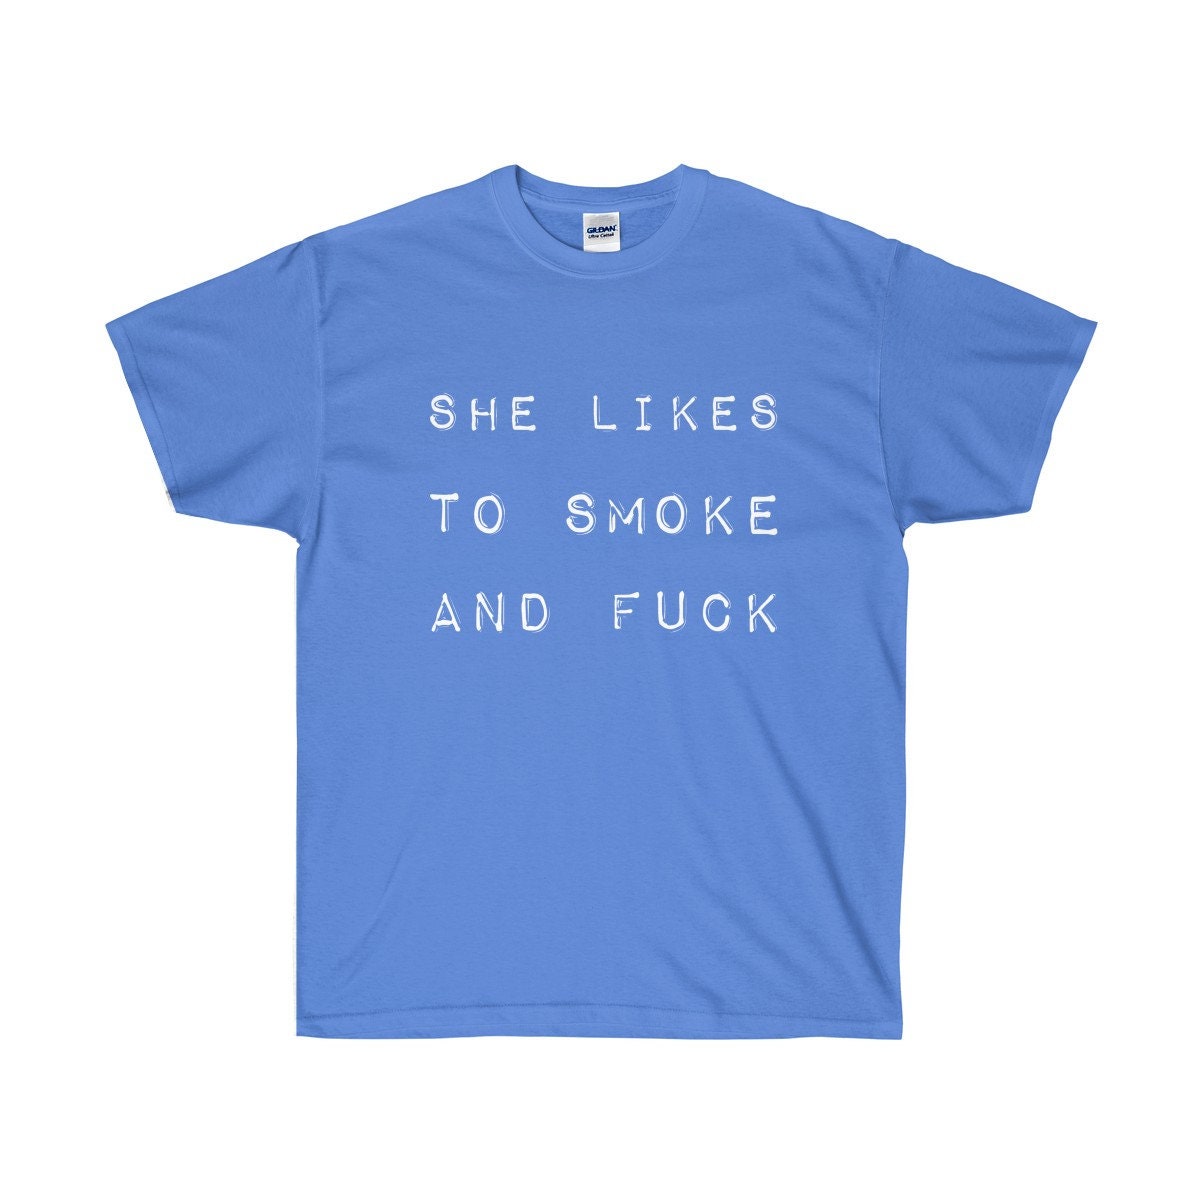 She likes to smoke and fuck Tumblr Style Shirt Pinterest | Etsy